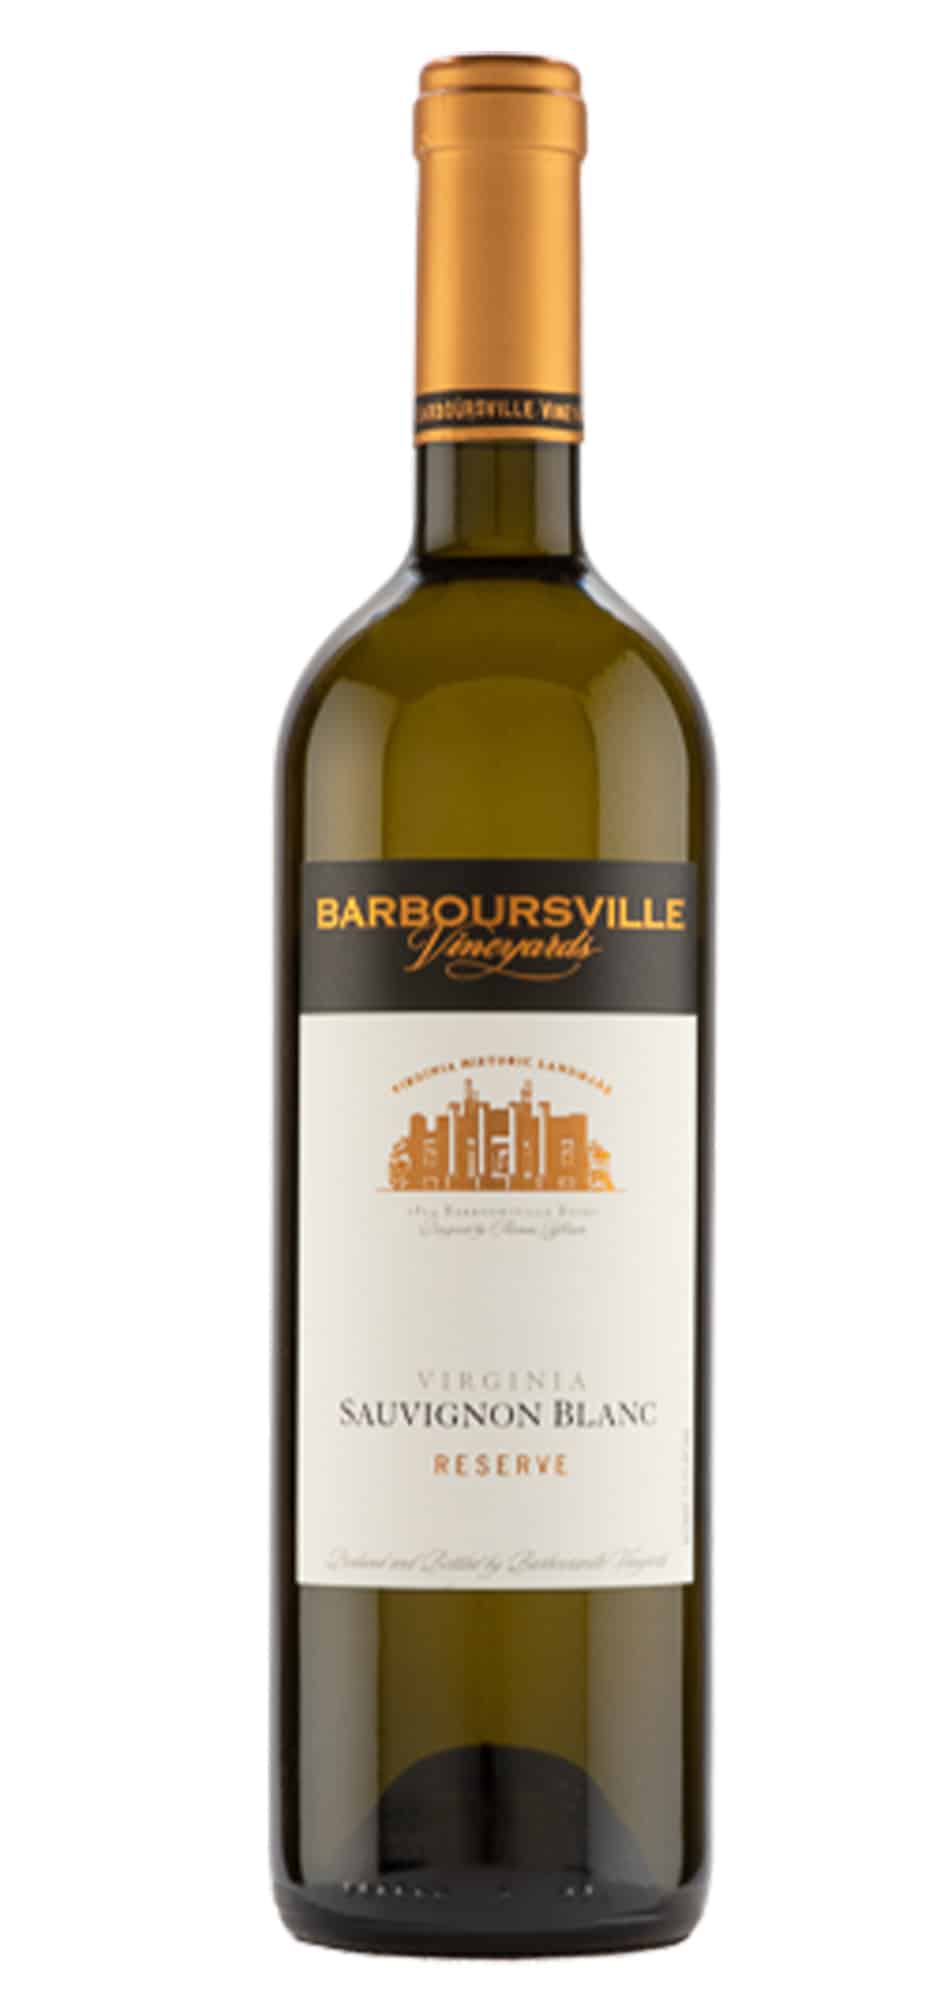 Barboursville Vineyards award-winning wine, Sauvignon Blanc bottle